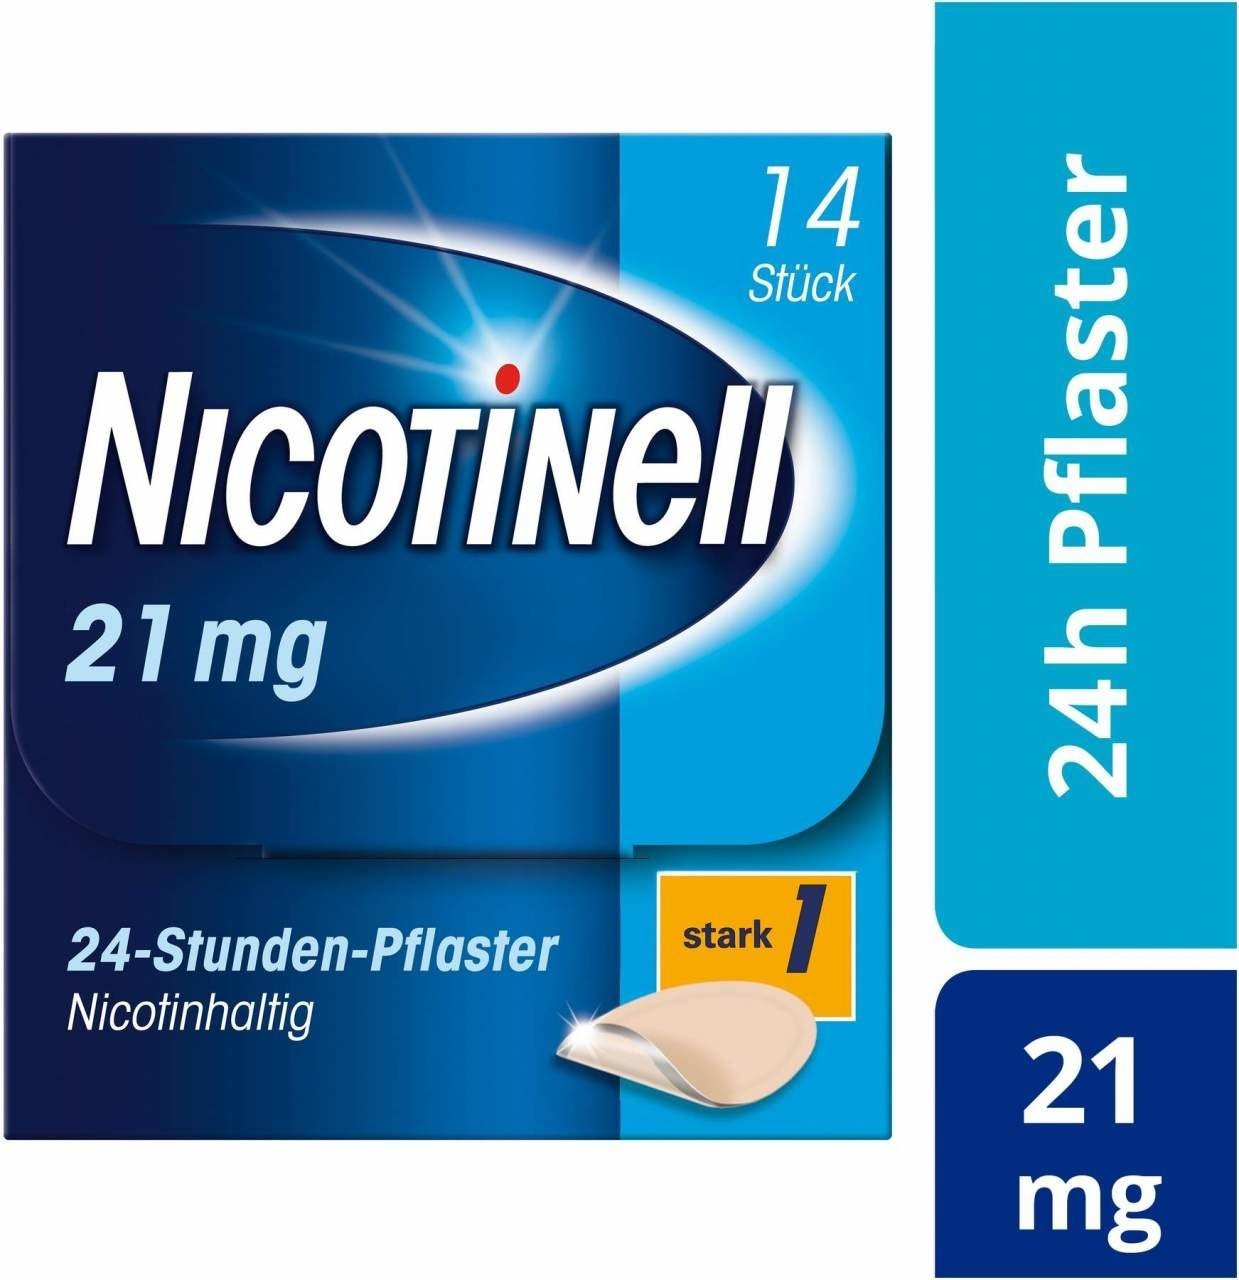 NIKOFRENON 14 mg/24 Stunden Pflaster transdermal 7 St. 